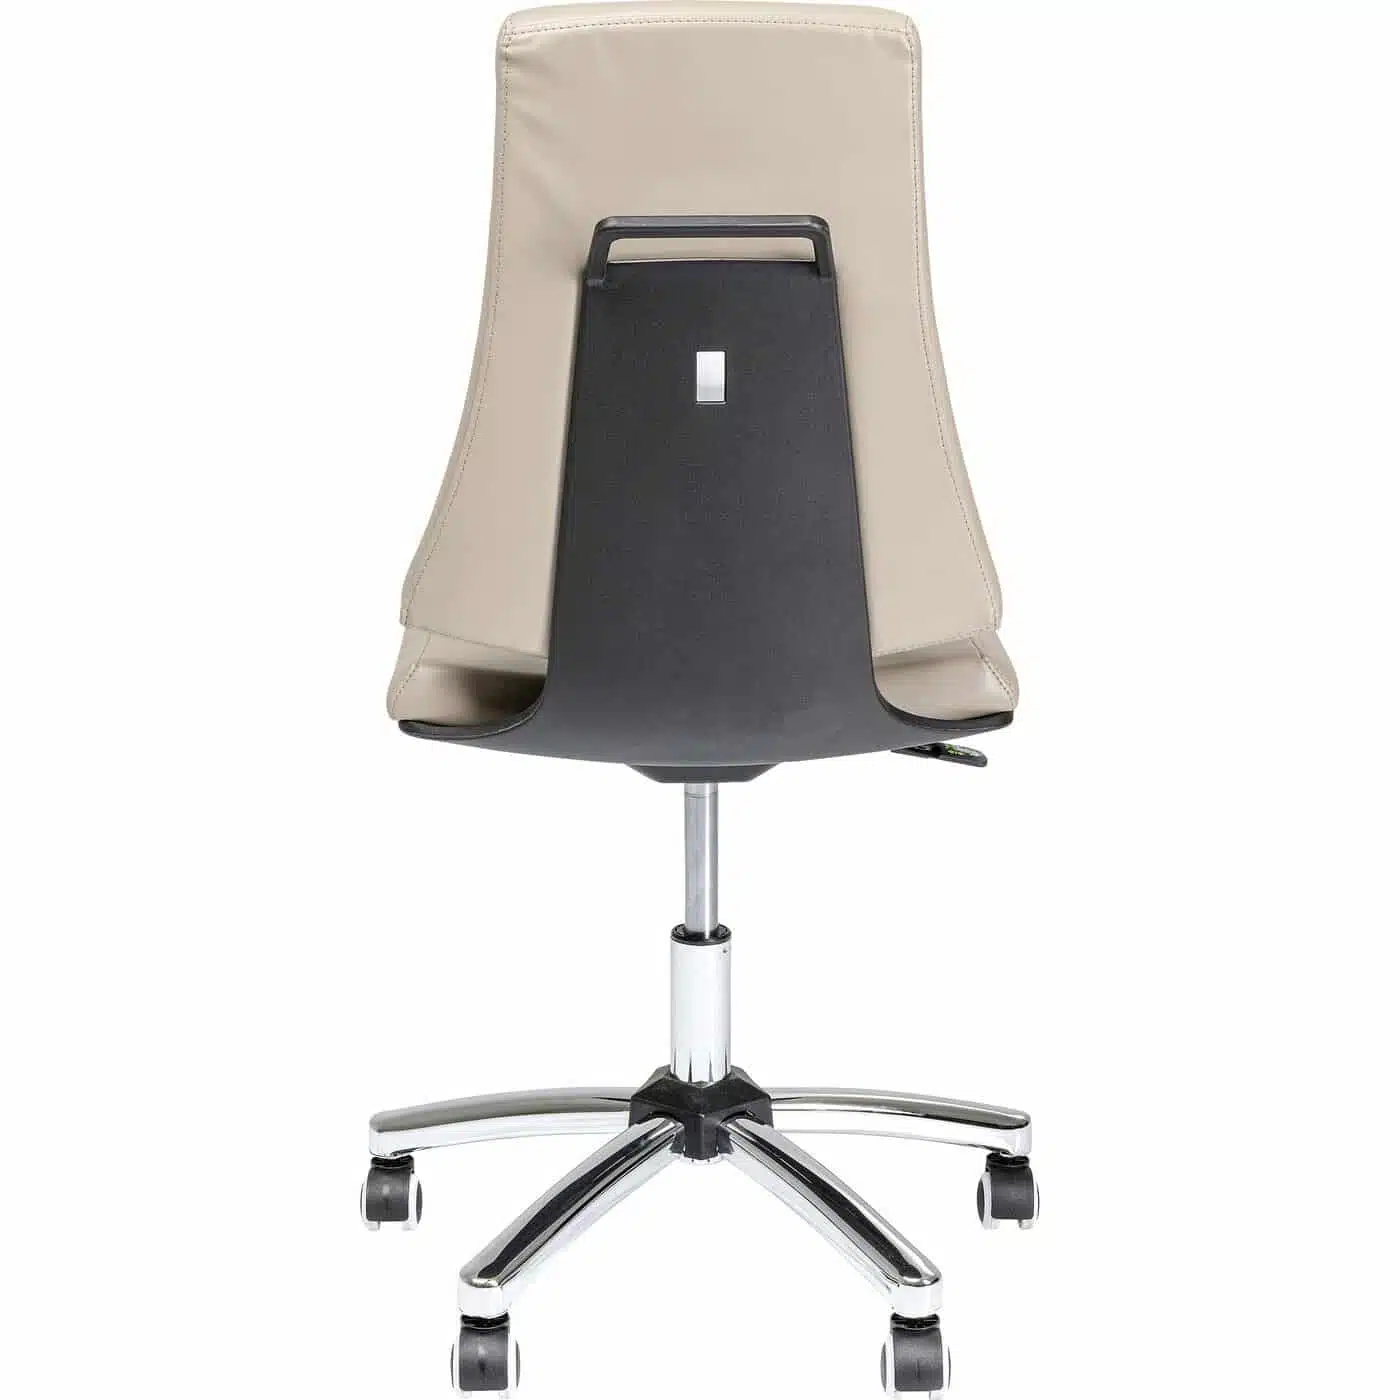 Chaise de bureau pivotante Marla Kare Design